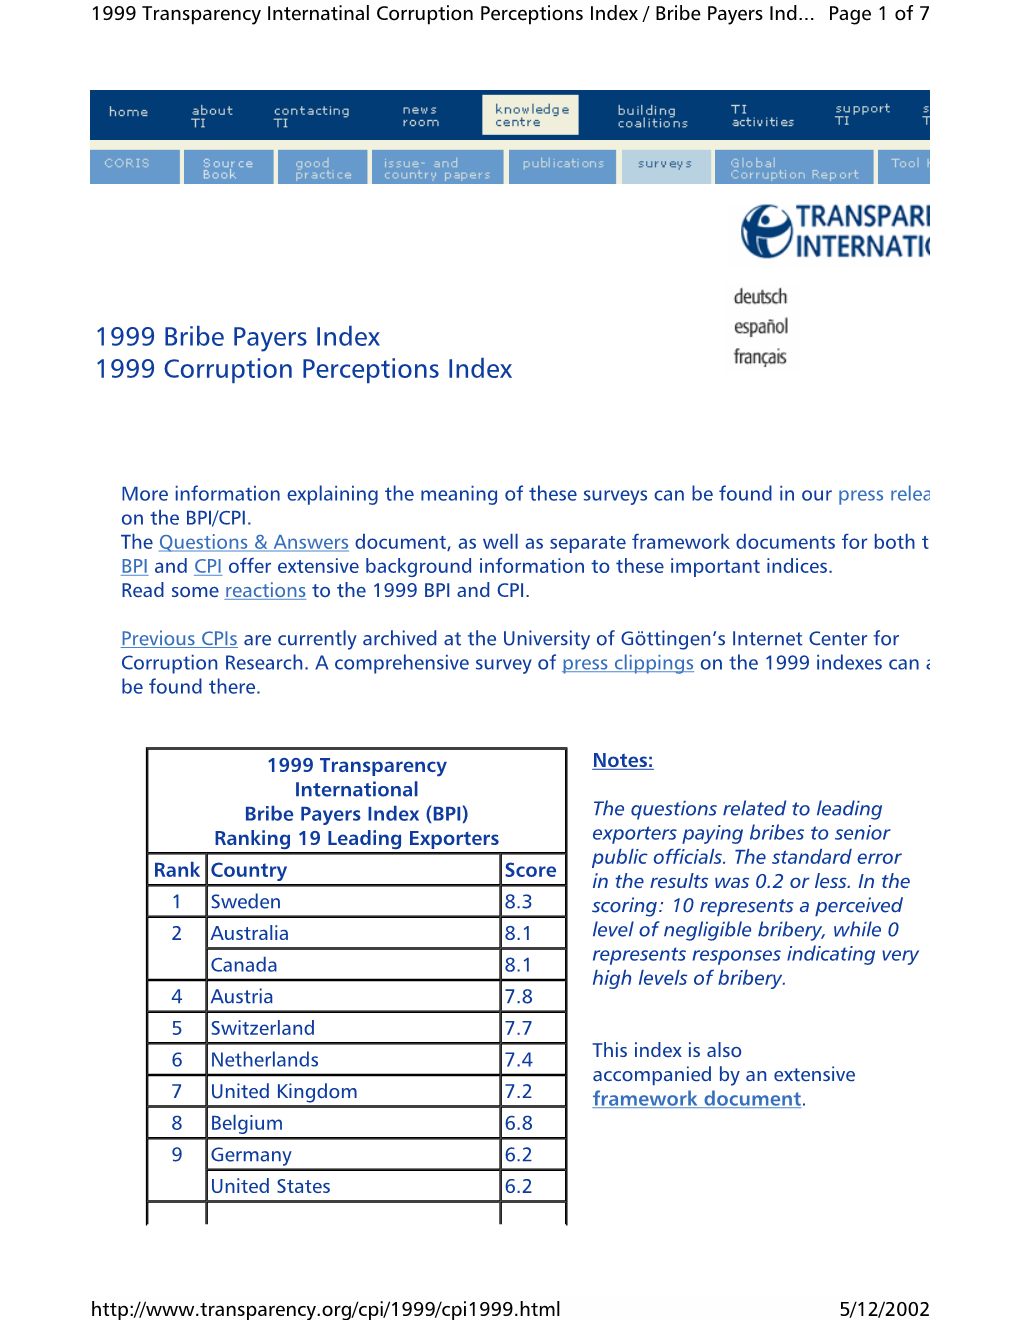 Transparency International, 1999 Bribe Payers Index/1999 Corruption